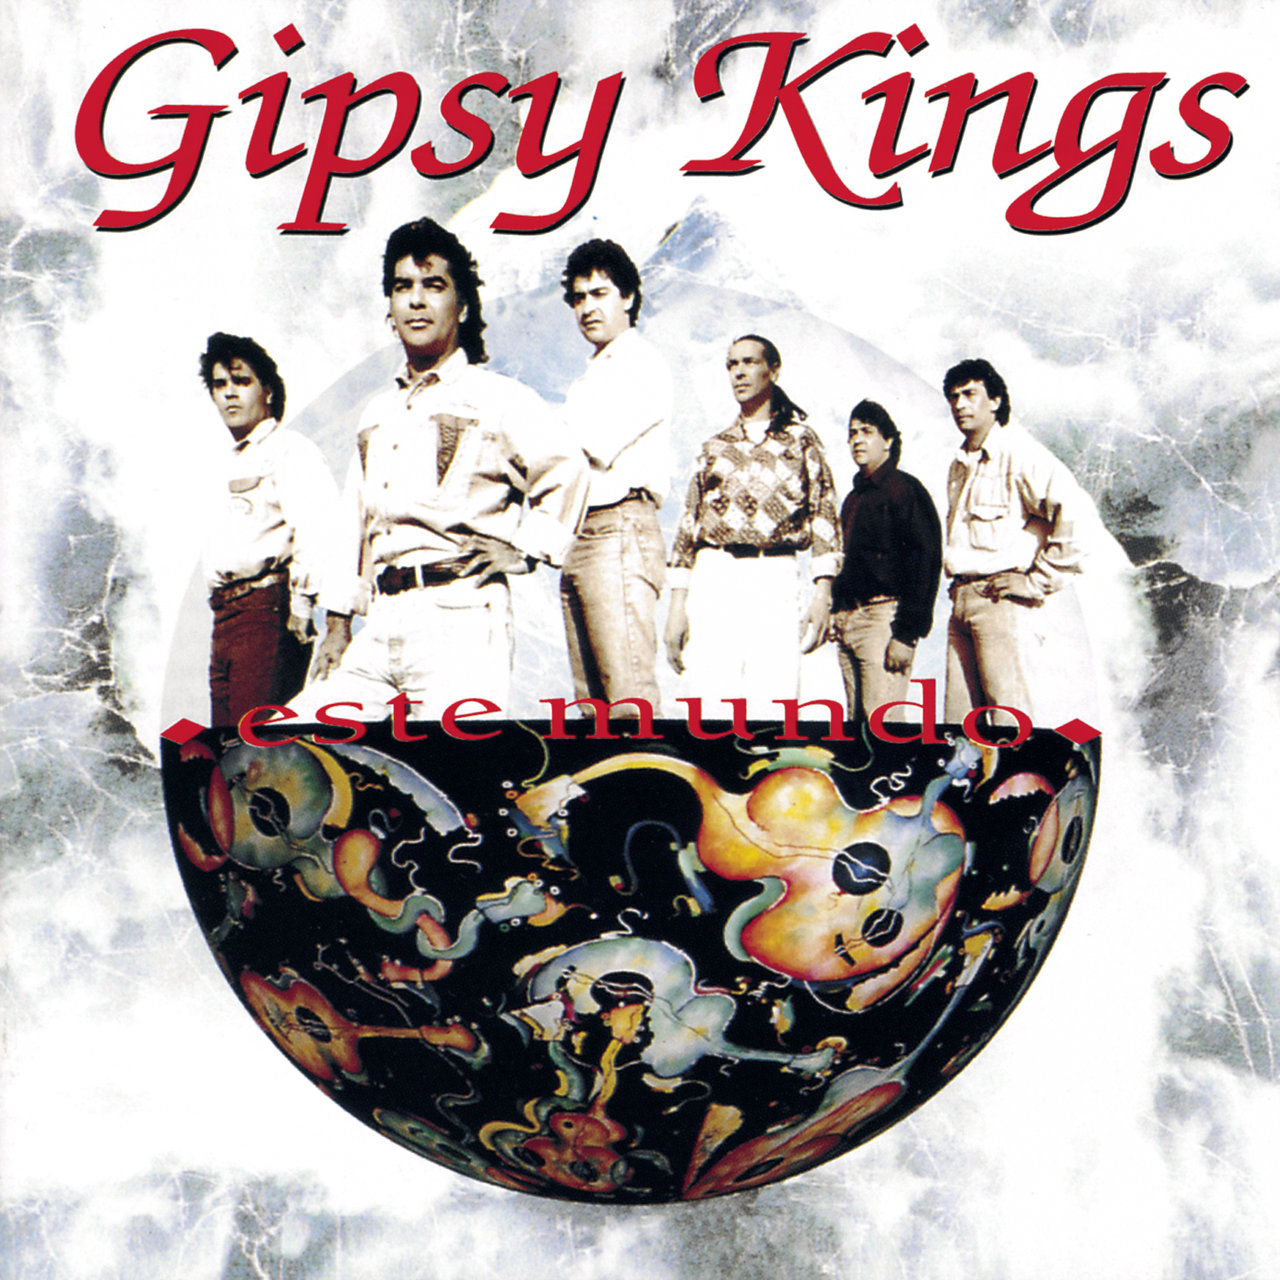 Gipsy Kings Este Mundo cover artwork